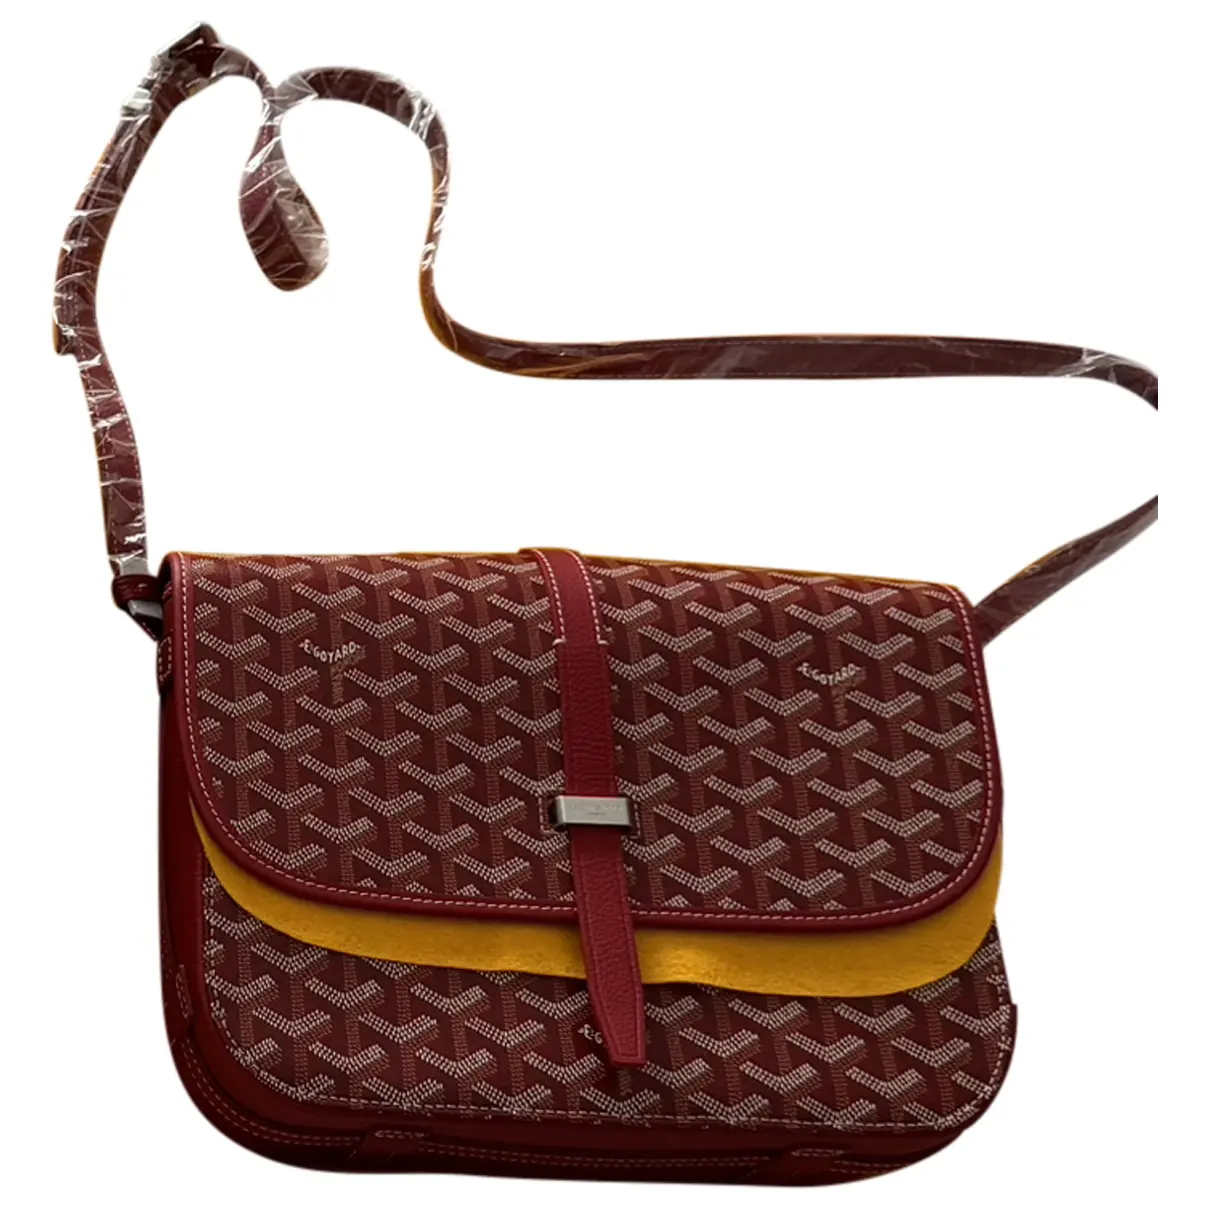 Belvedère leather handbag Goyard